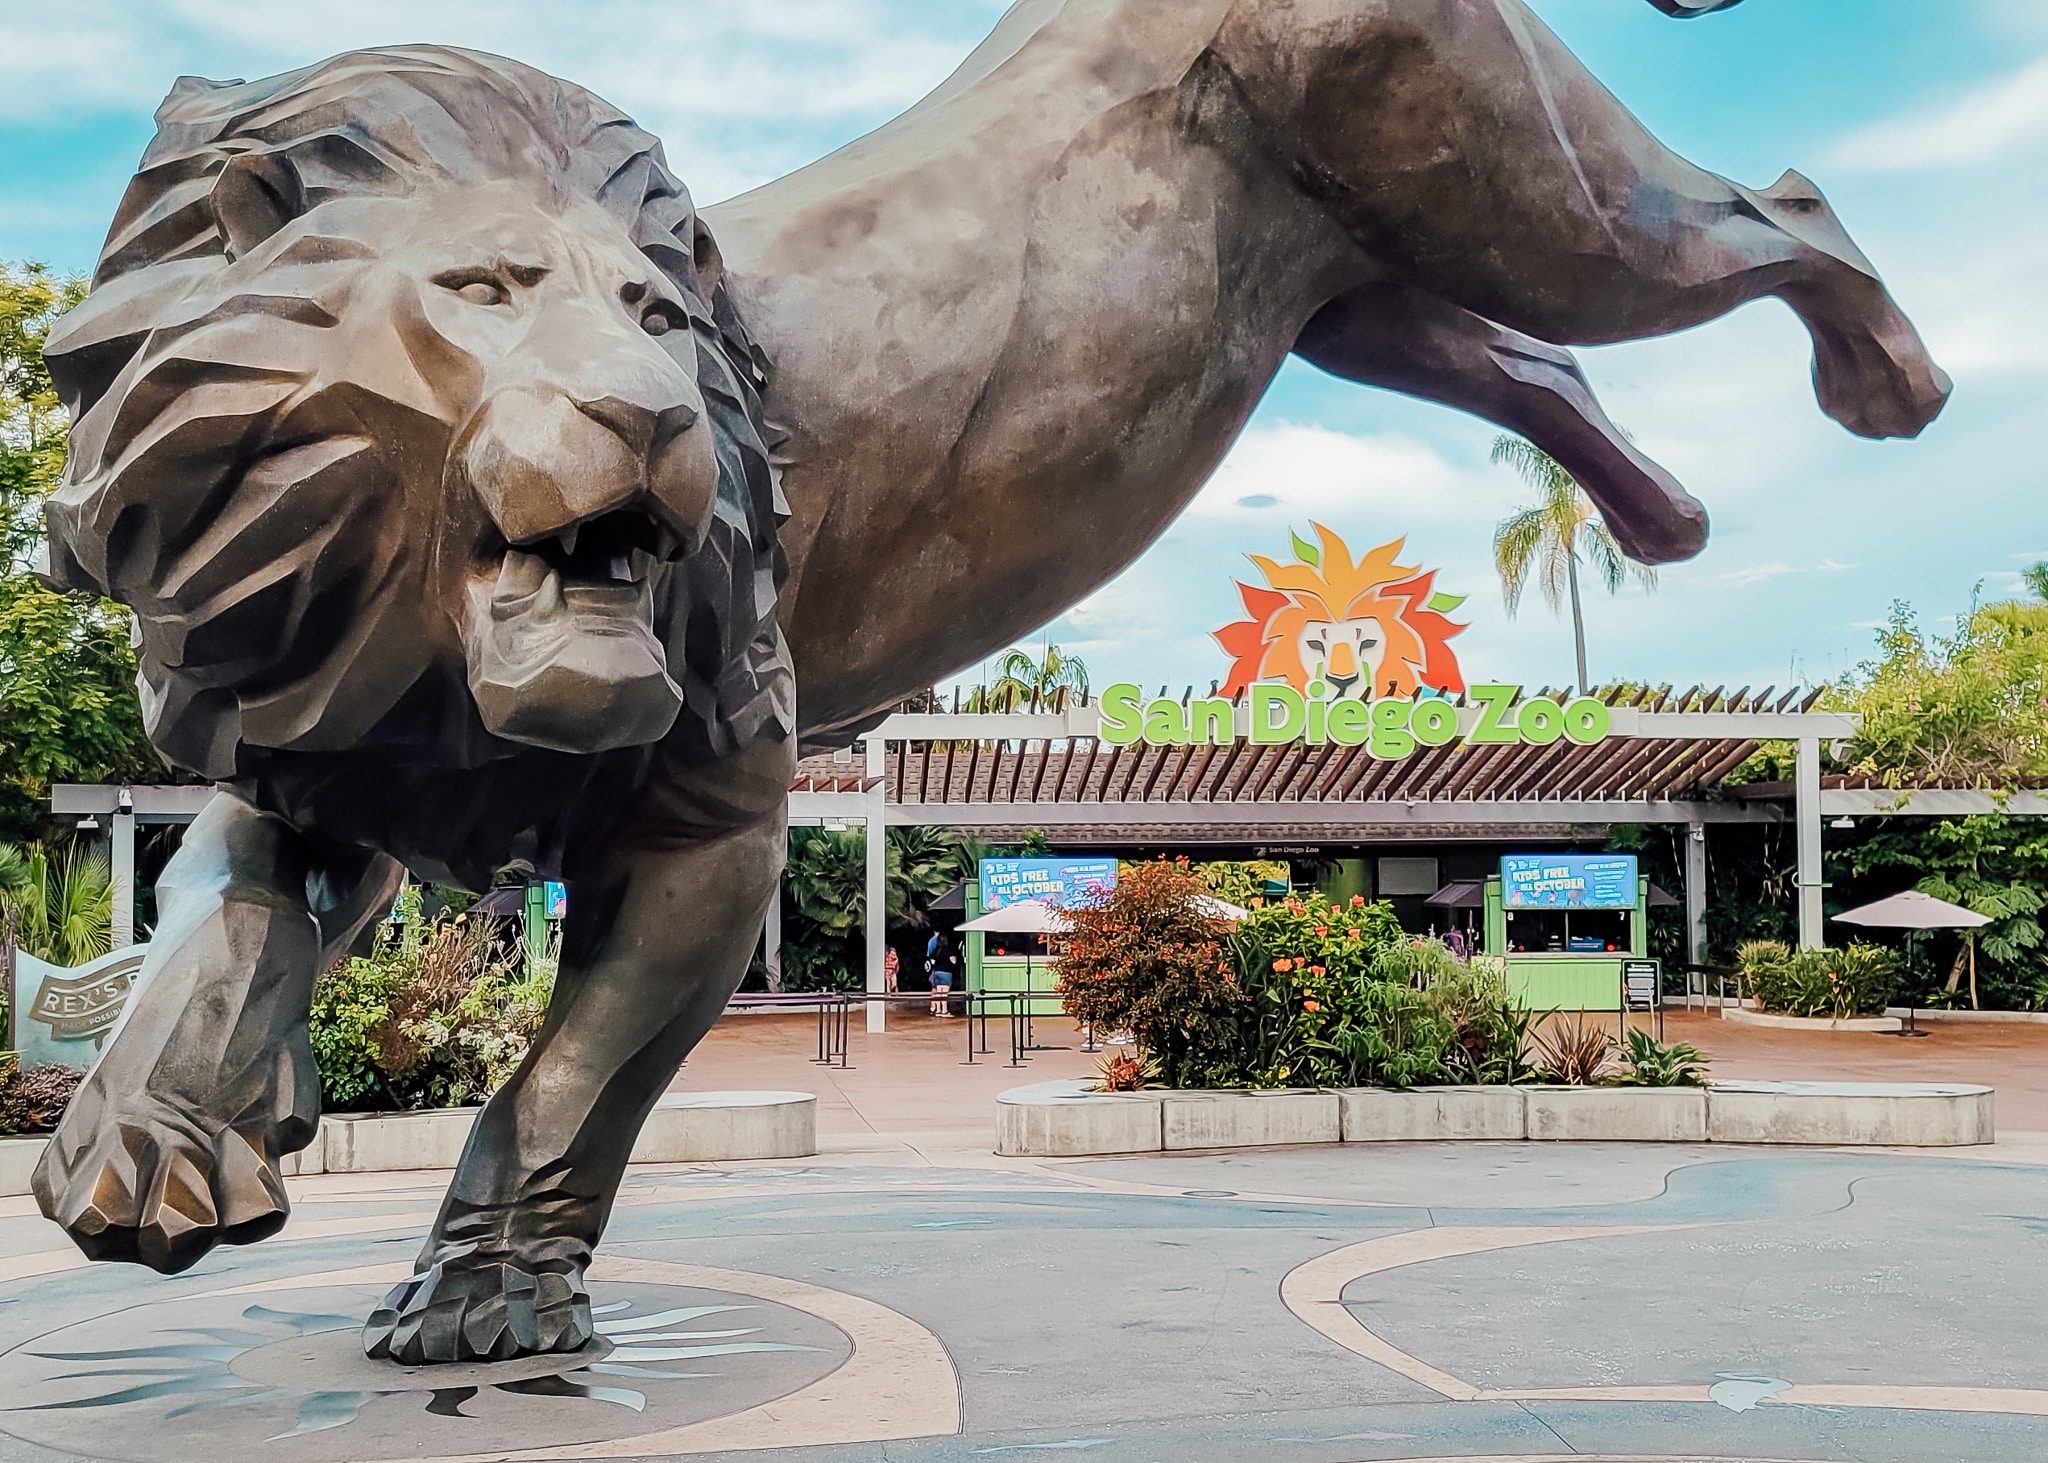 San Diego Zoo vs. Safari Park: Which Should You Visit?